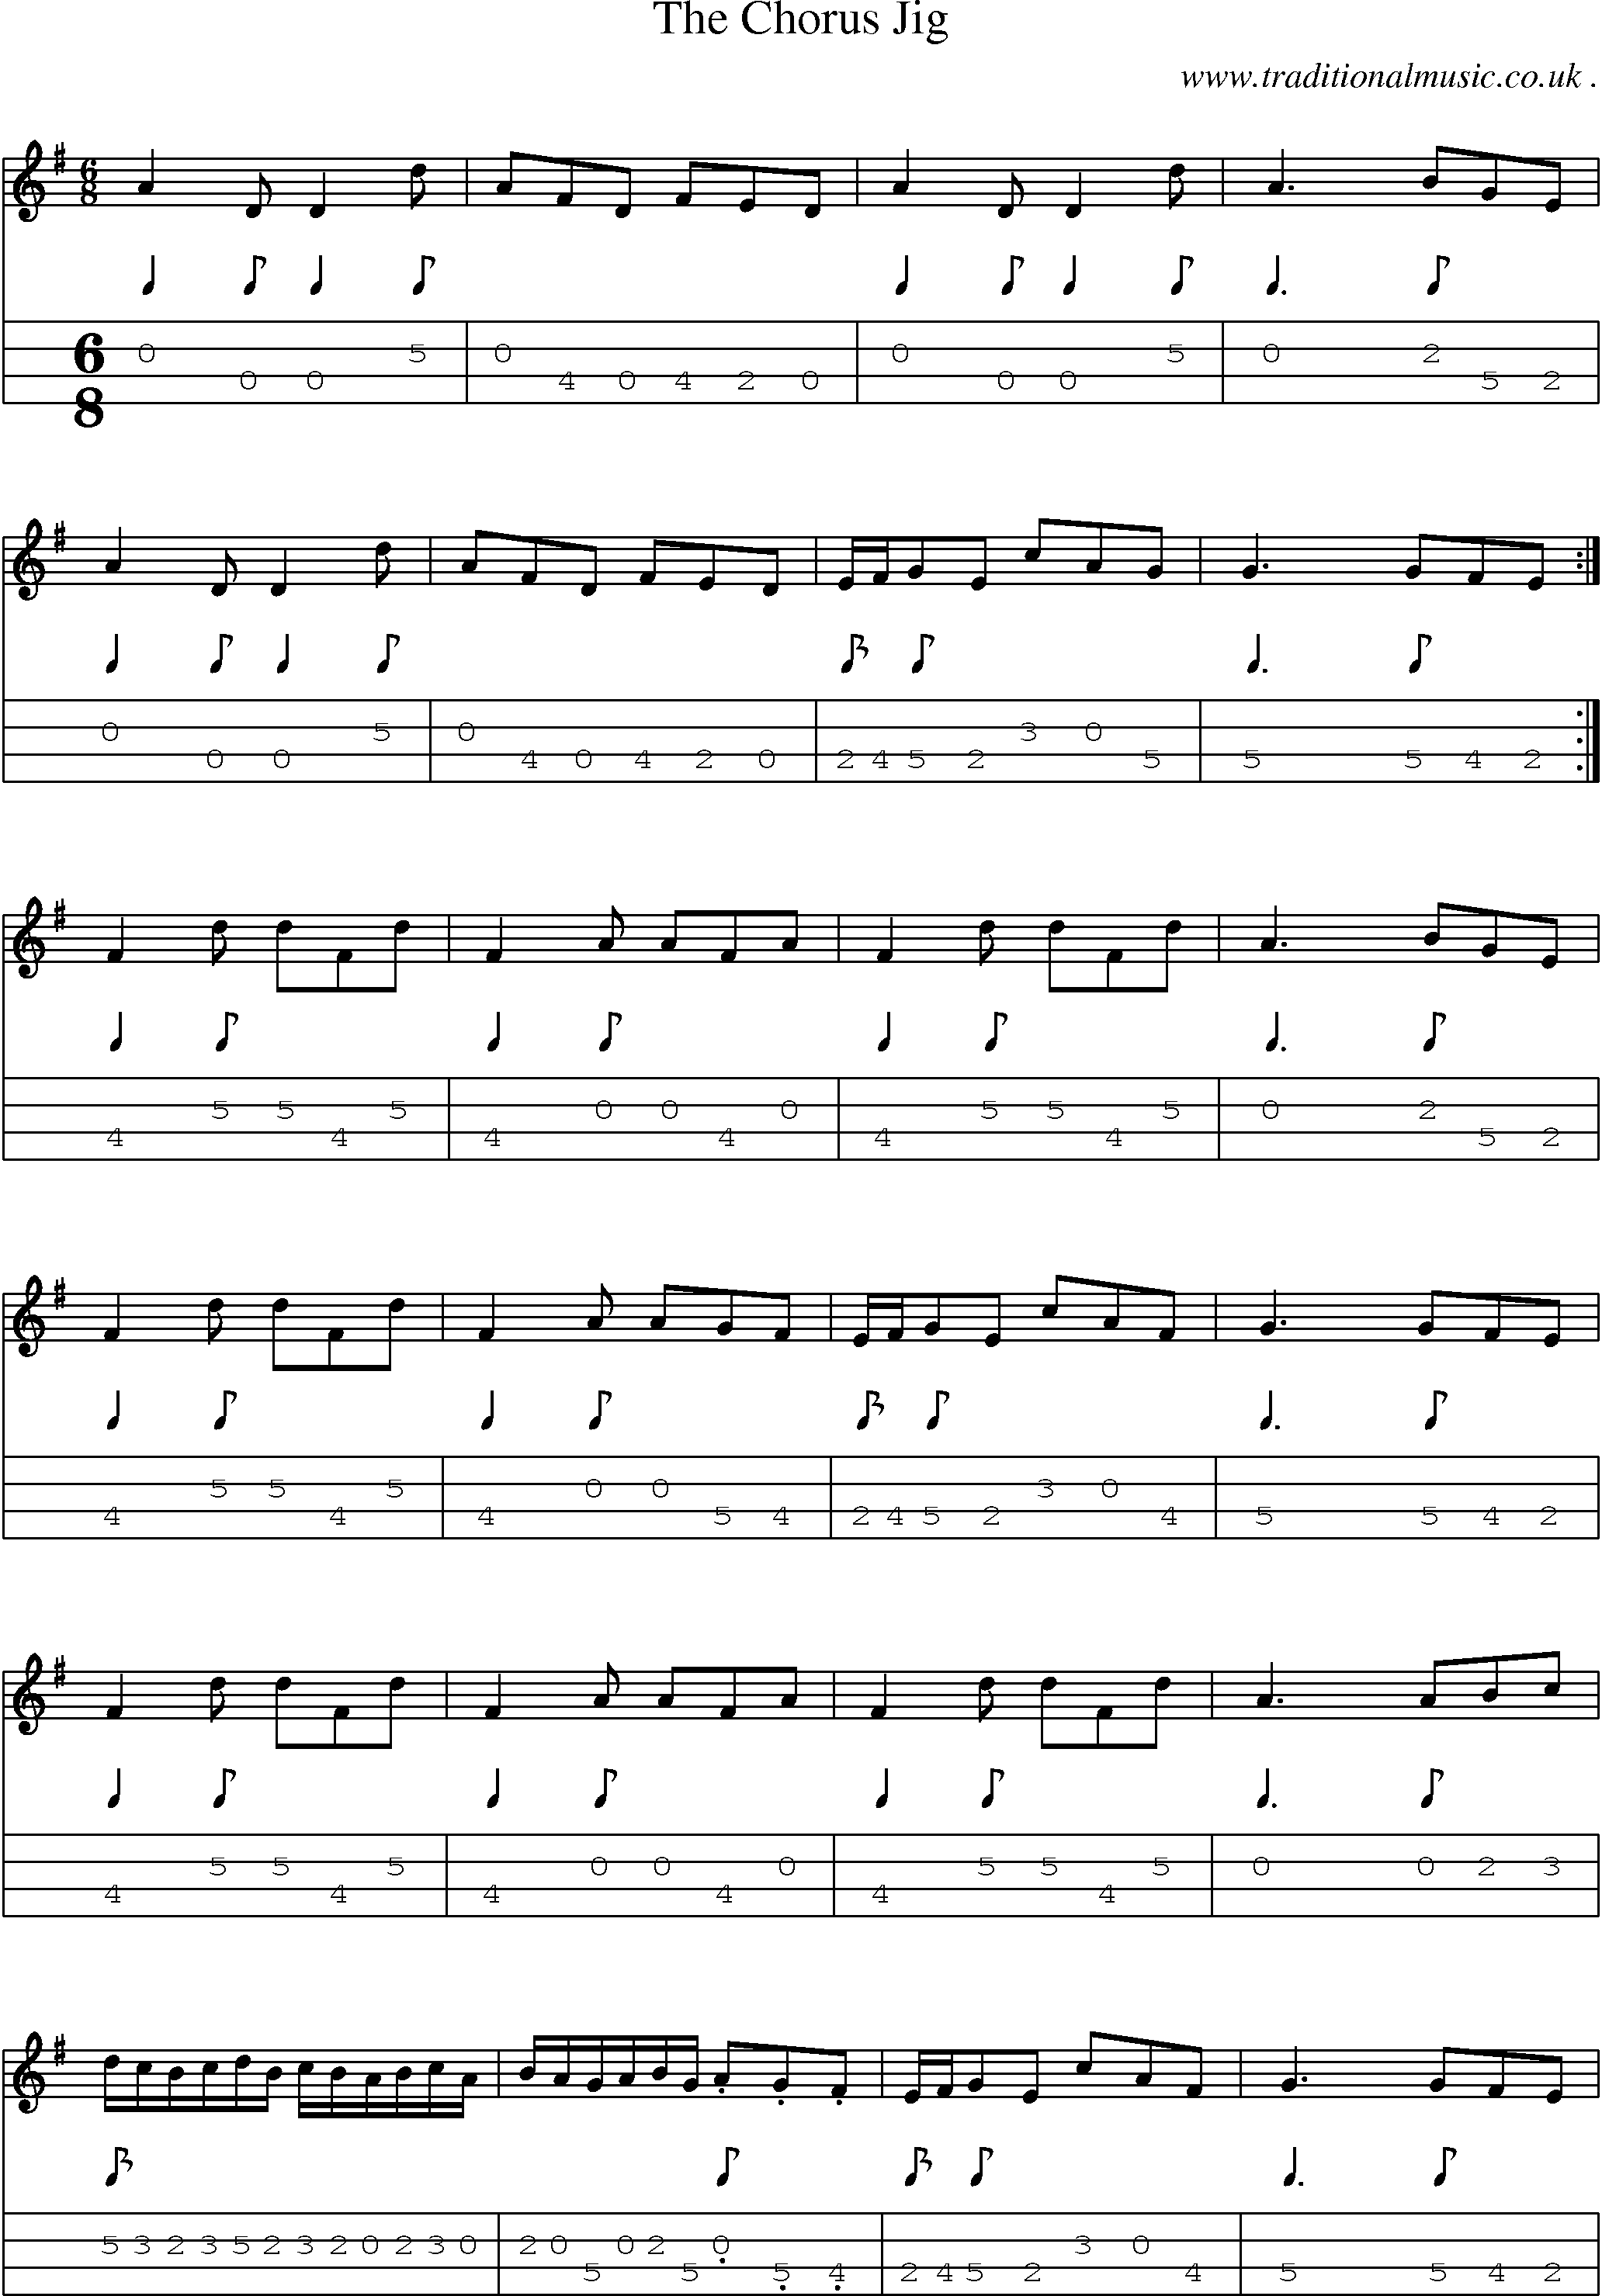 Sheet-Music and Mandolin Tabs for The Chorus Jig